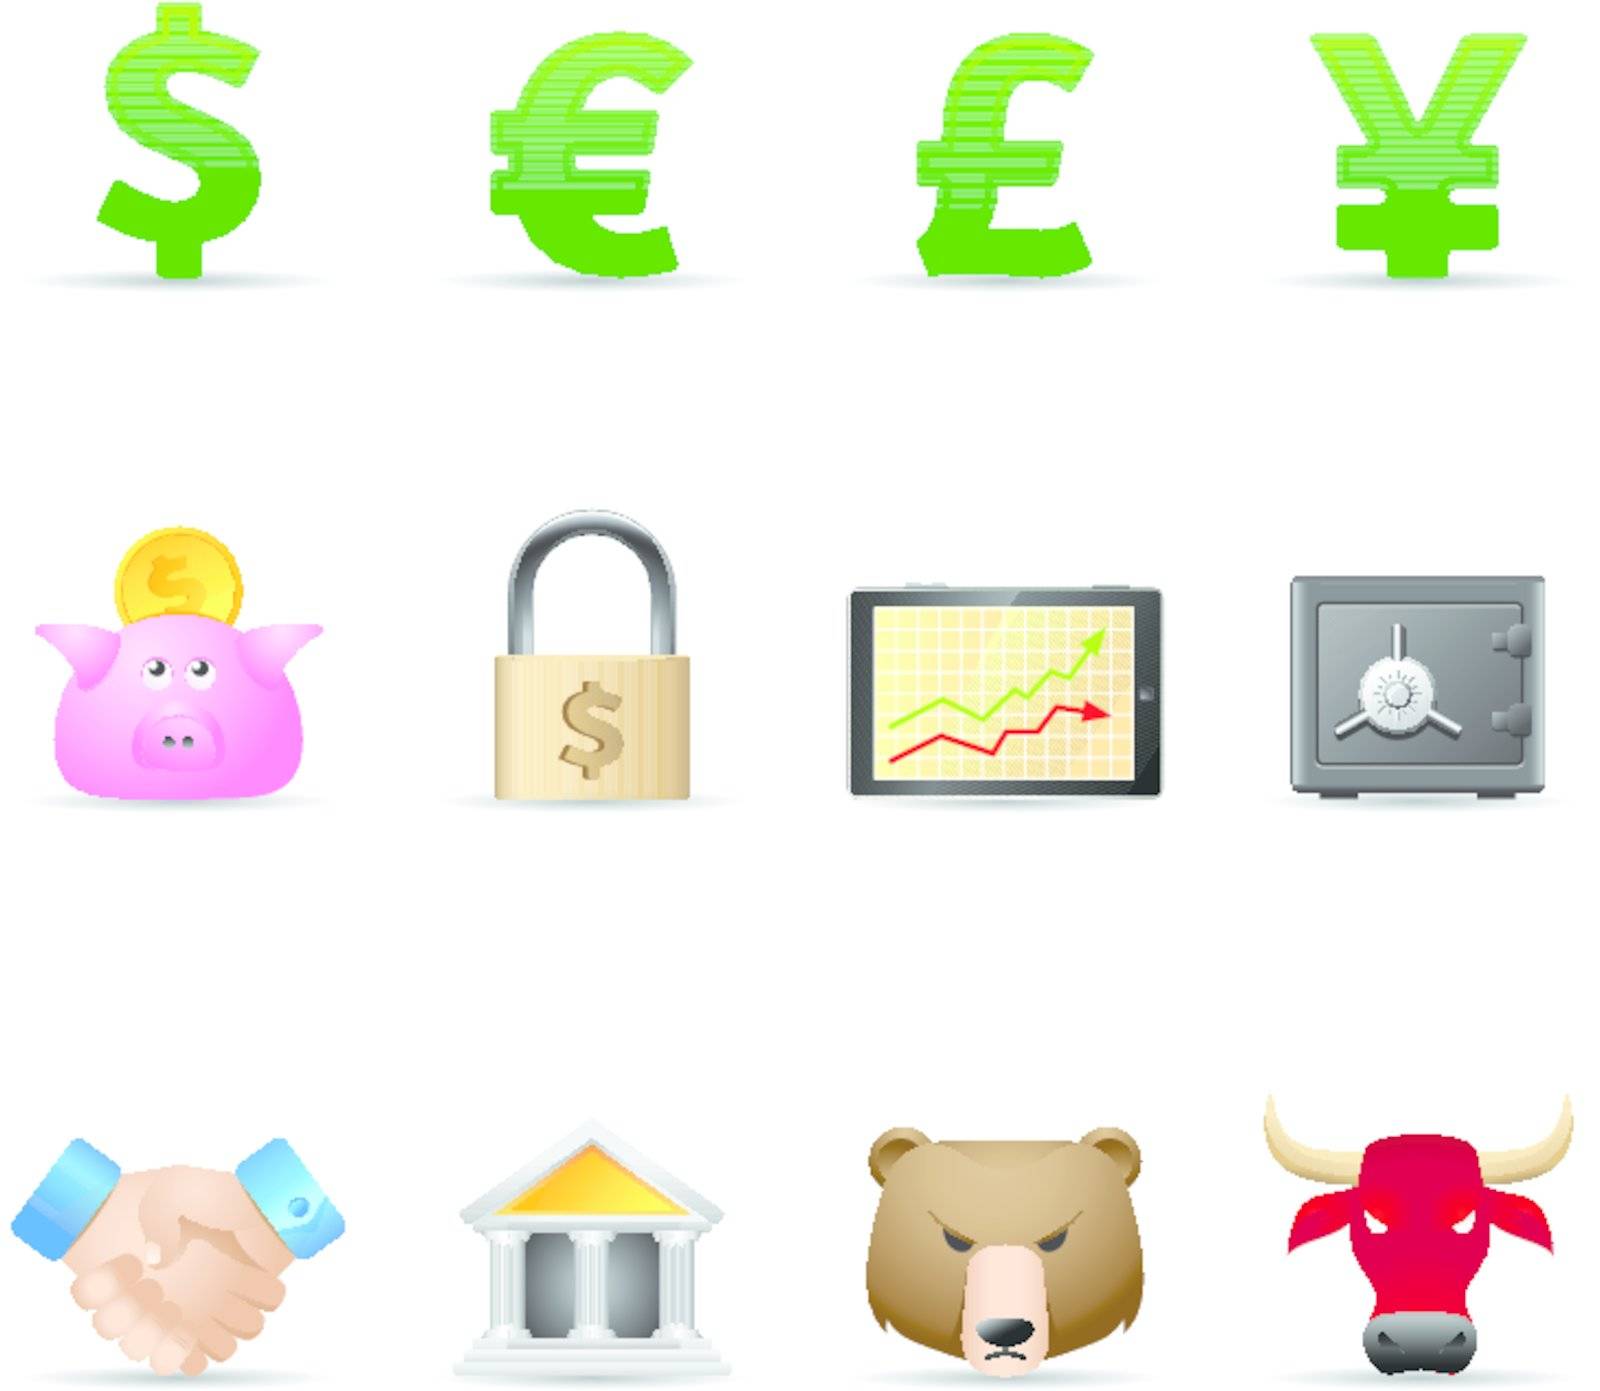 Finance icon set. 
Font source: 
http://www.fontsquirrel.com/fonts/amaranth